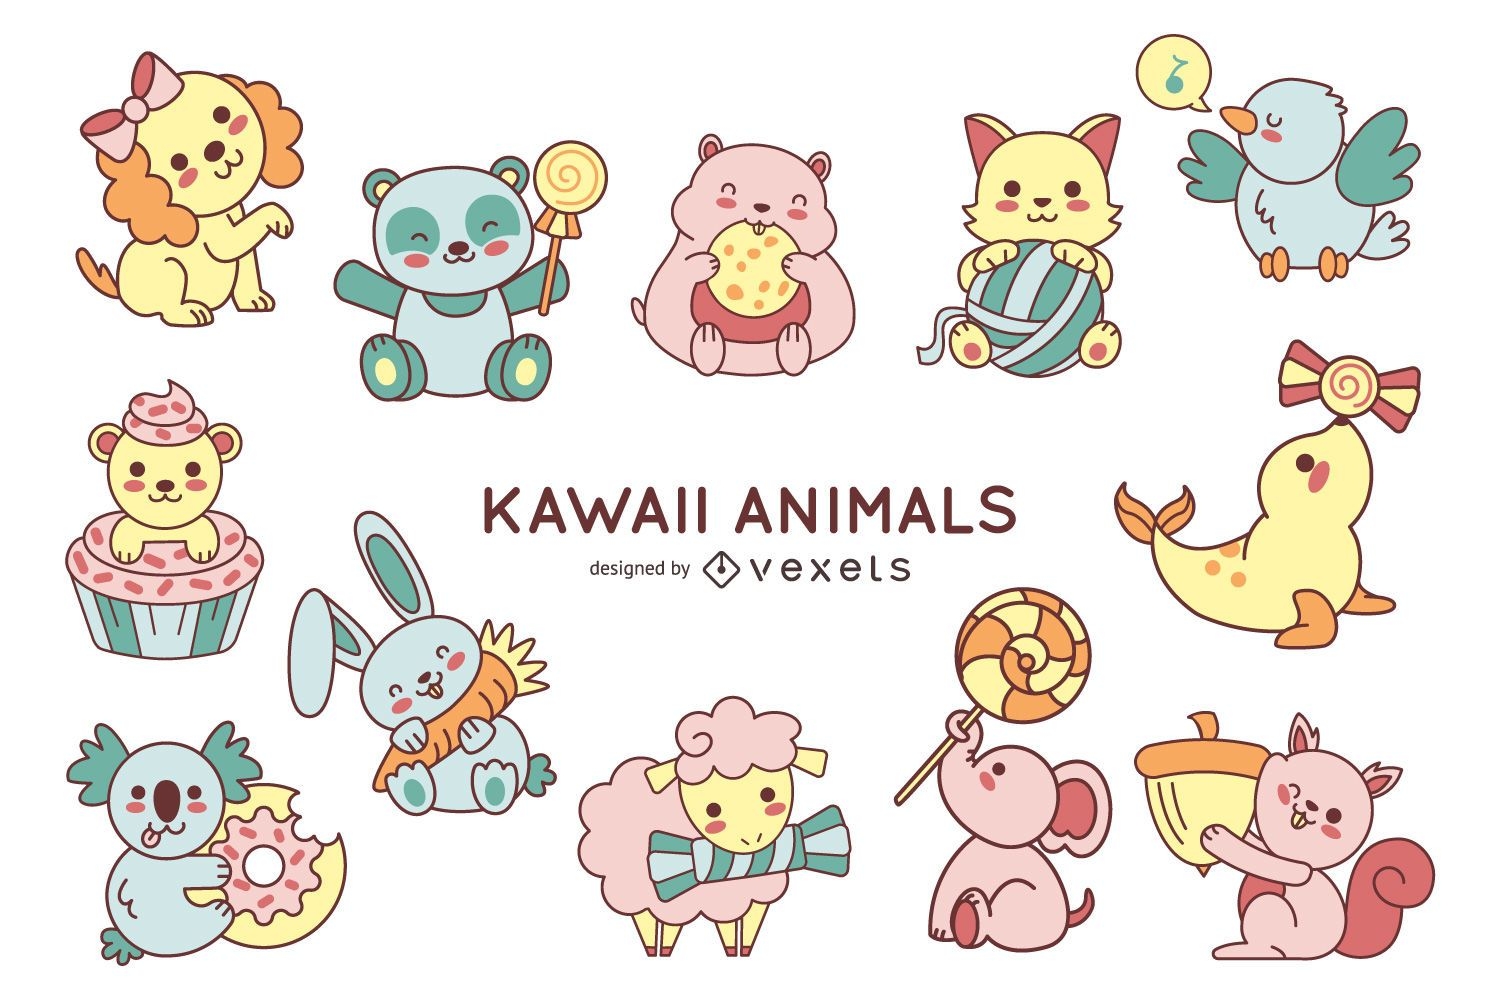 Kawaii Animals Images – Browse 369,492 Stock Photos, Vectors, and Video